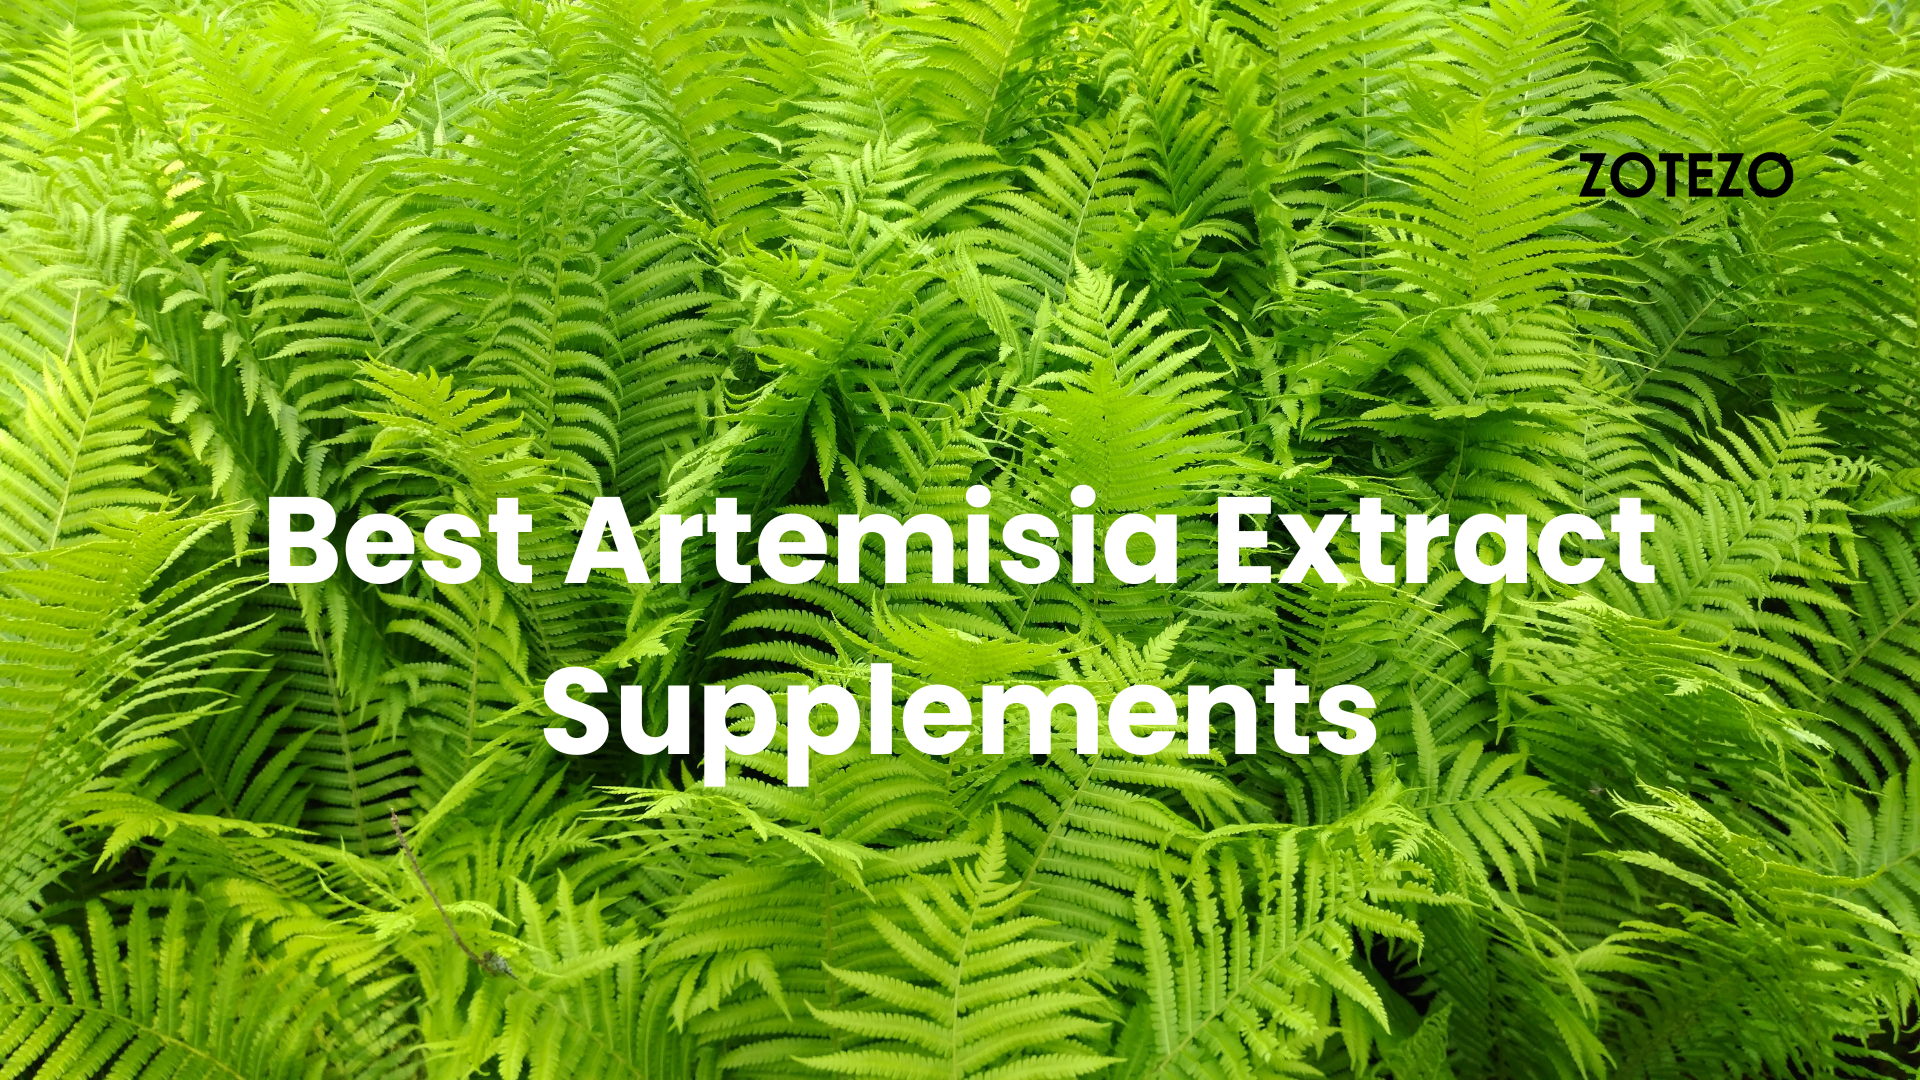 Artemisia Extract Supplements in India